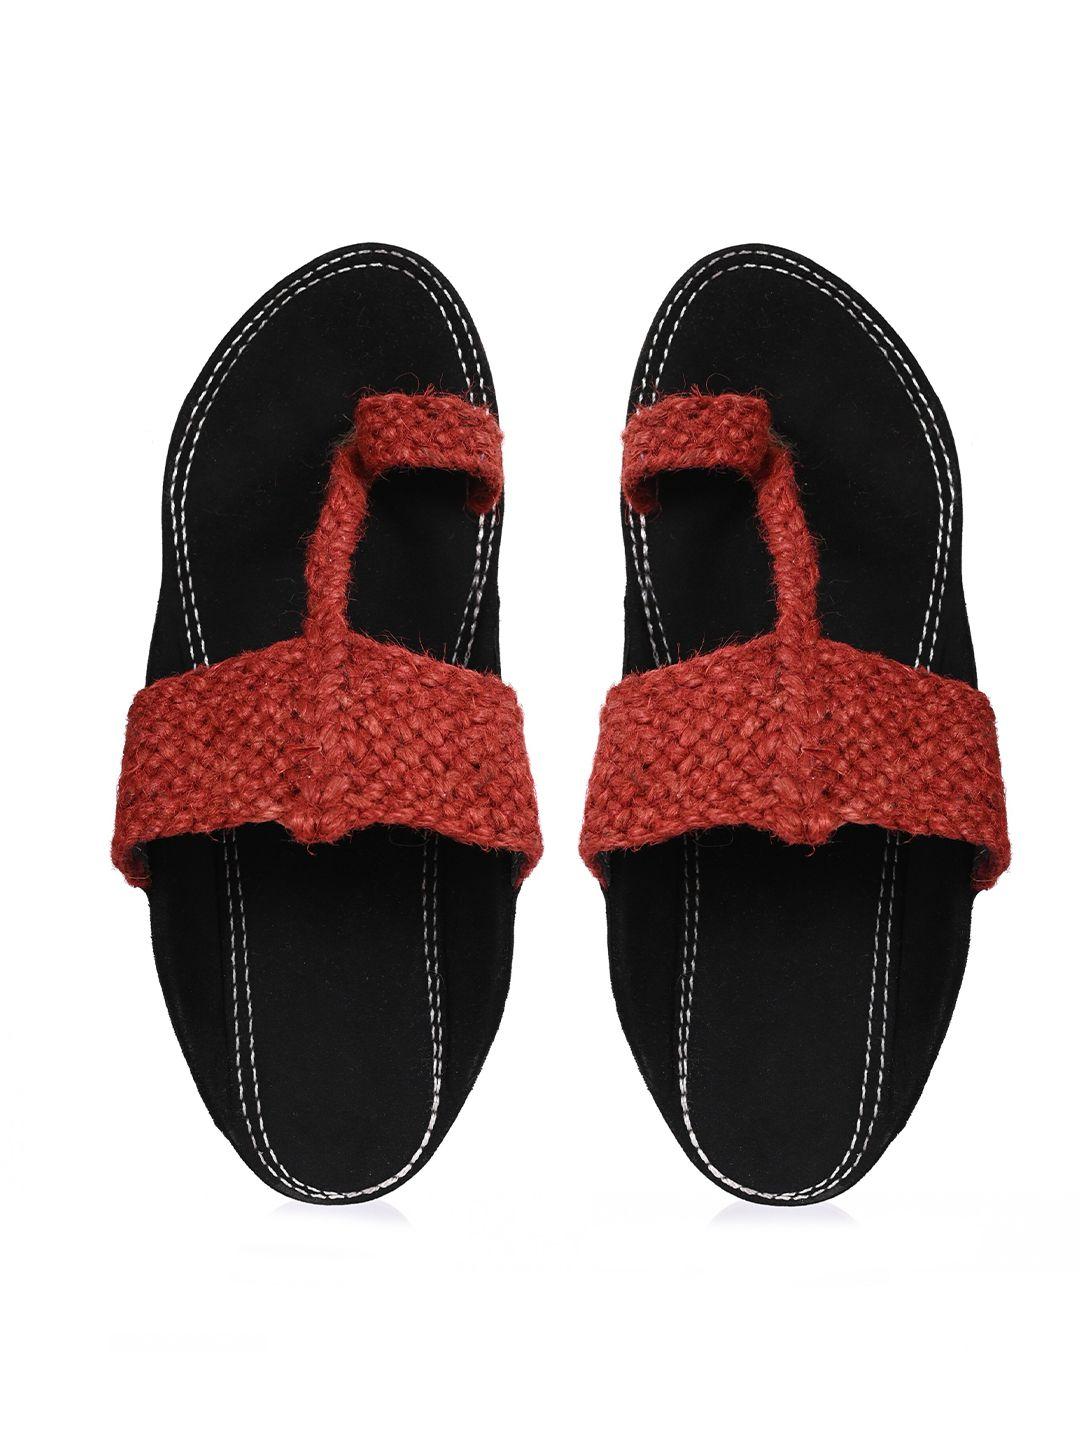 aristitch men red & black thong flip-flops